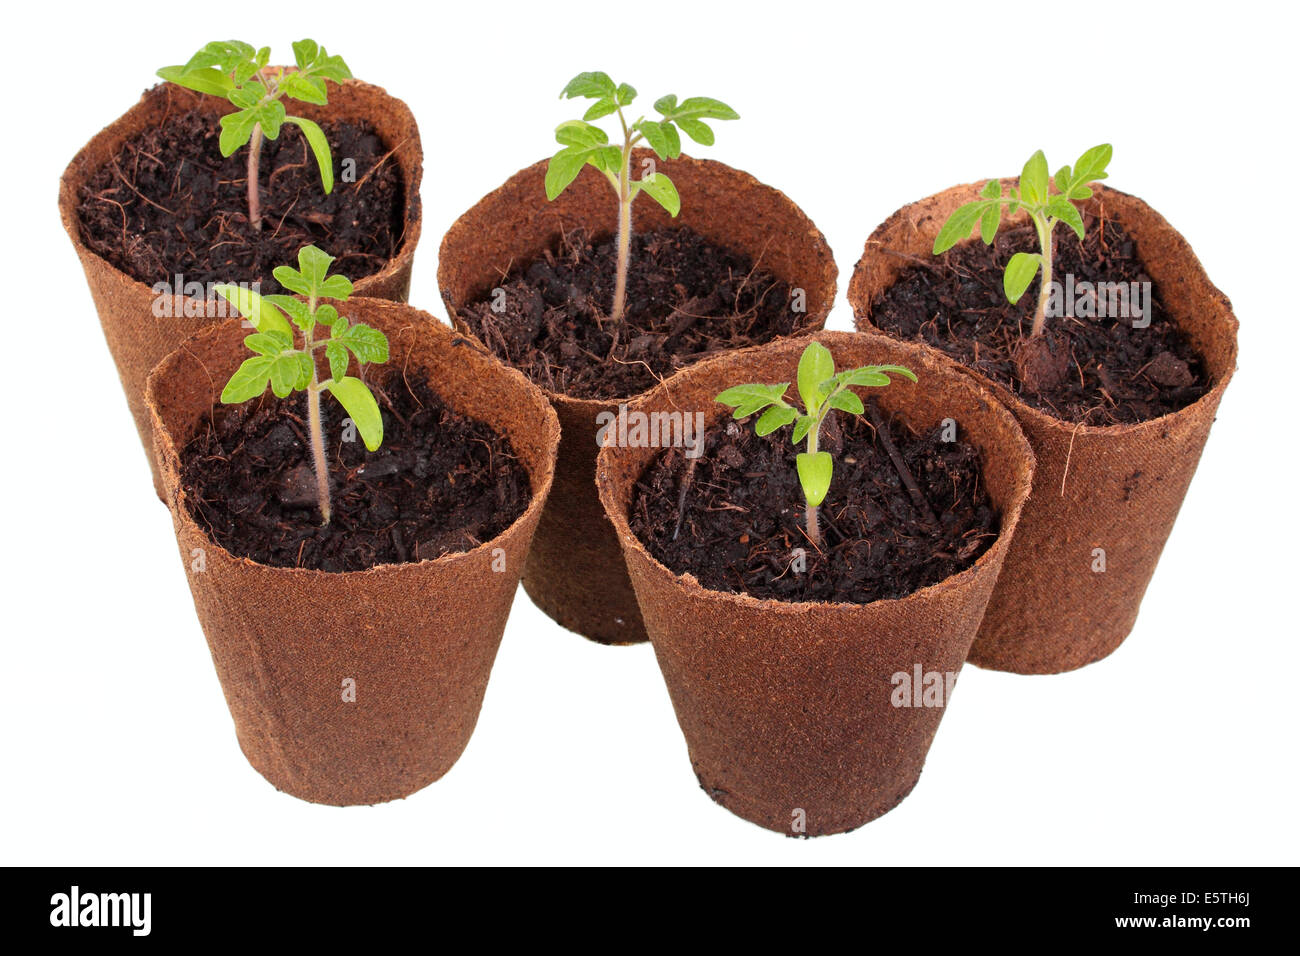 Tomato plants (Solanum lycopersicum) growing in biodegradable pots Stock Photo